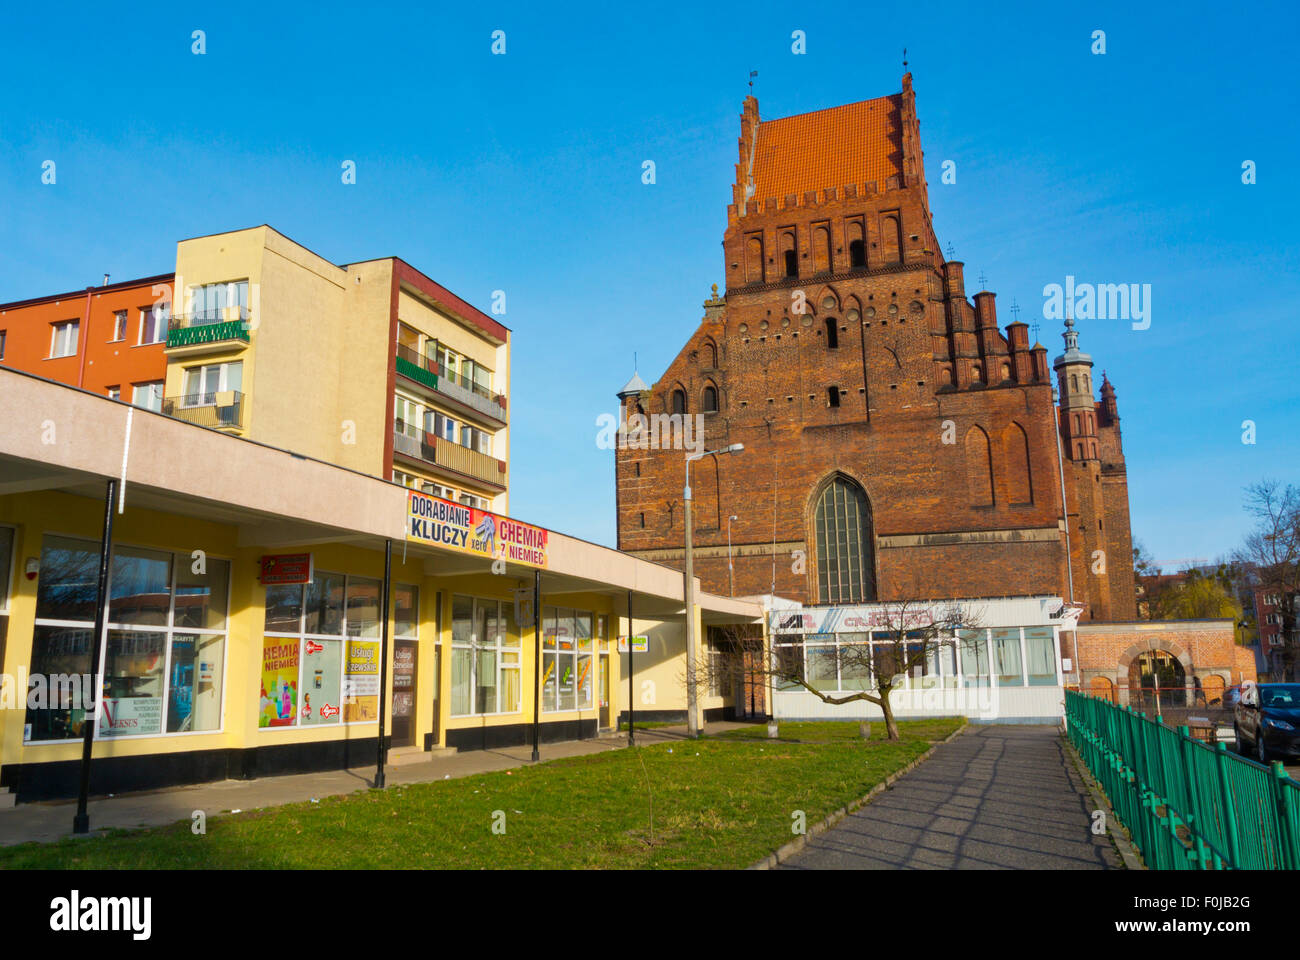 Church of Peter and Paul, Parafia sw Piotra i Pawla, Gdansk, Pomerania province, Poland Stock Photo